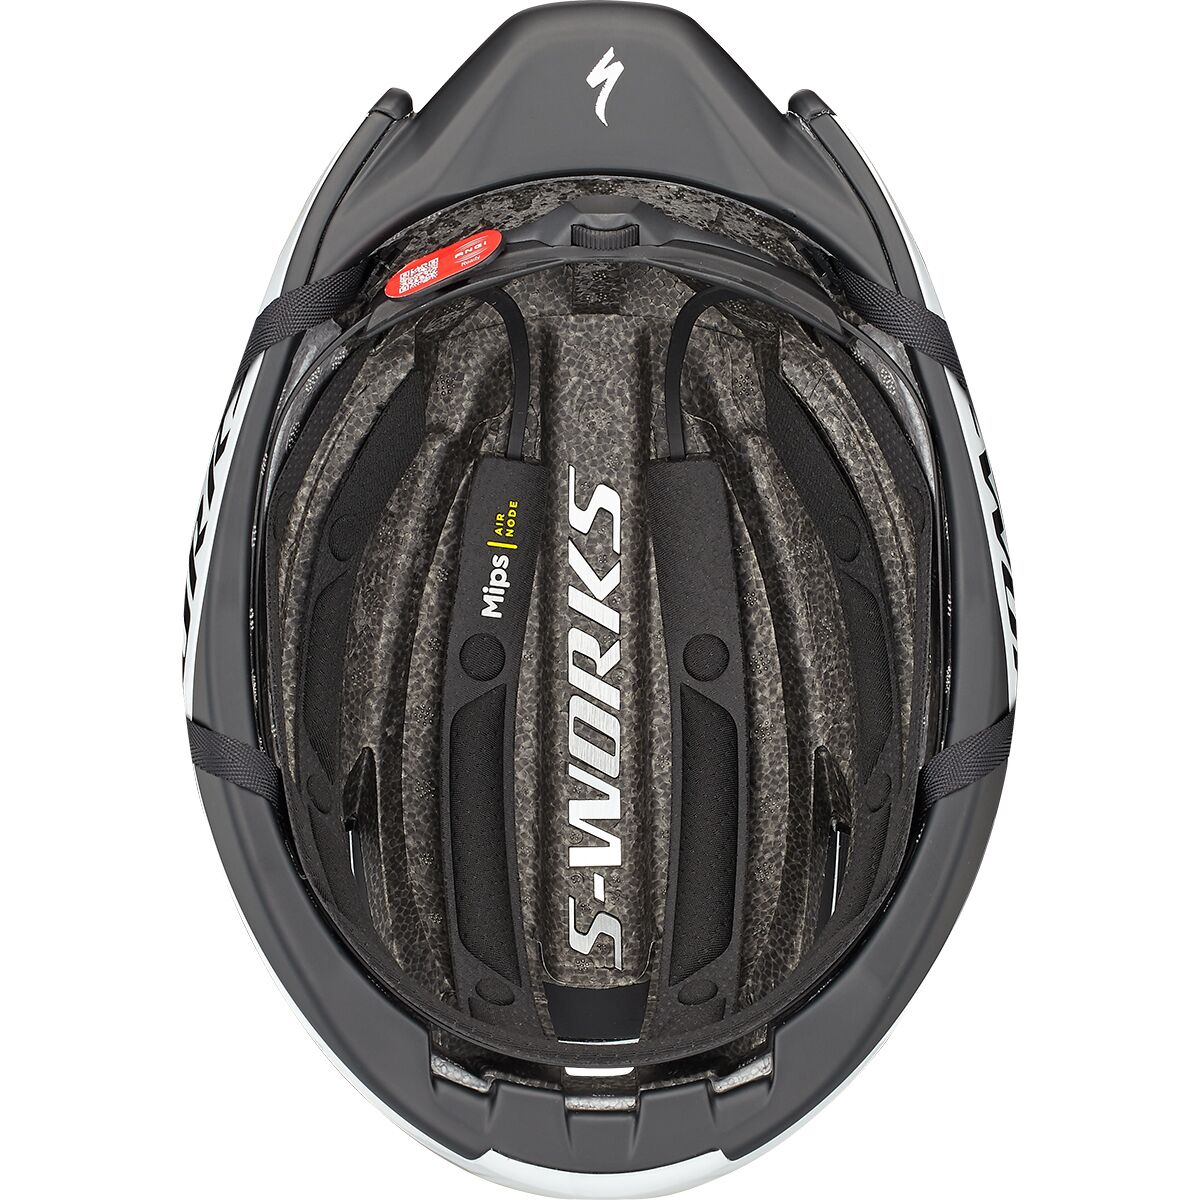 Specialized S-Works Evade 3 Mips Helmet - Men